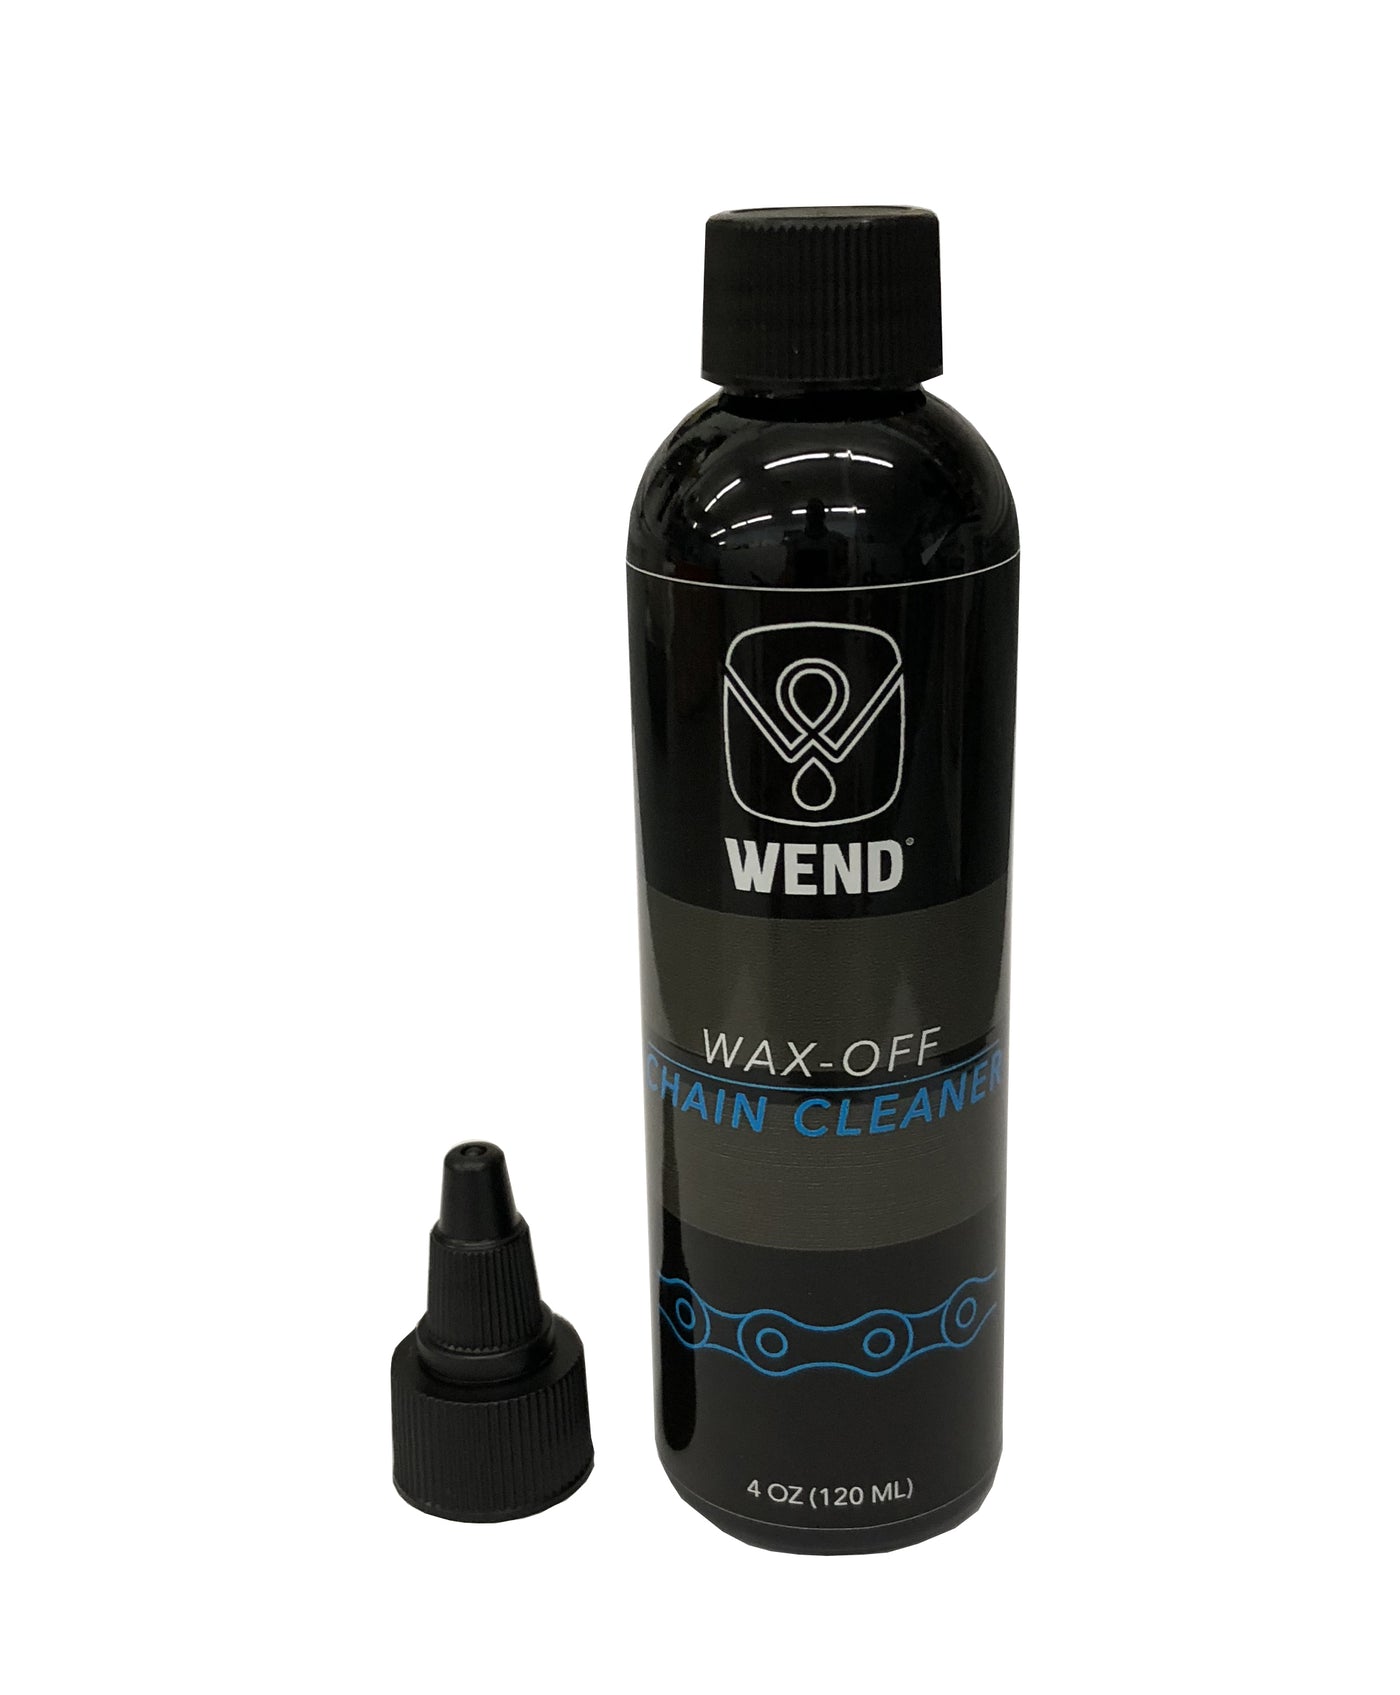 WEND Wax Off 16 ounce bottle